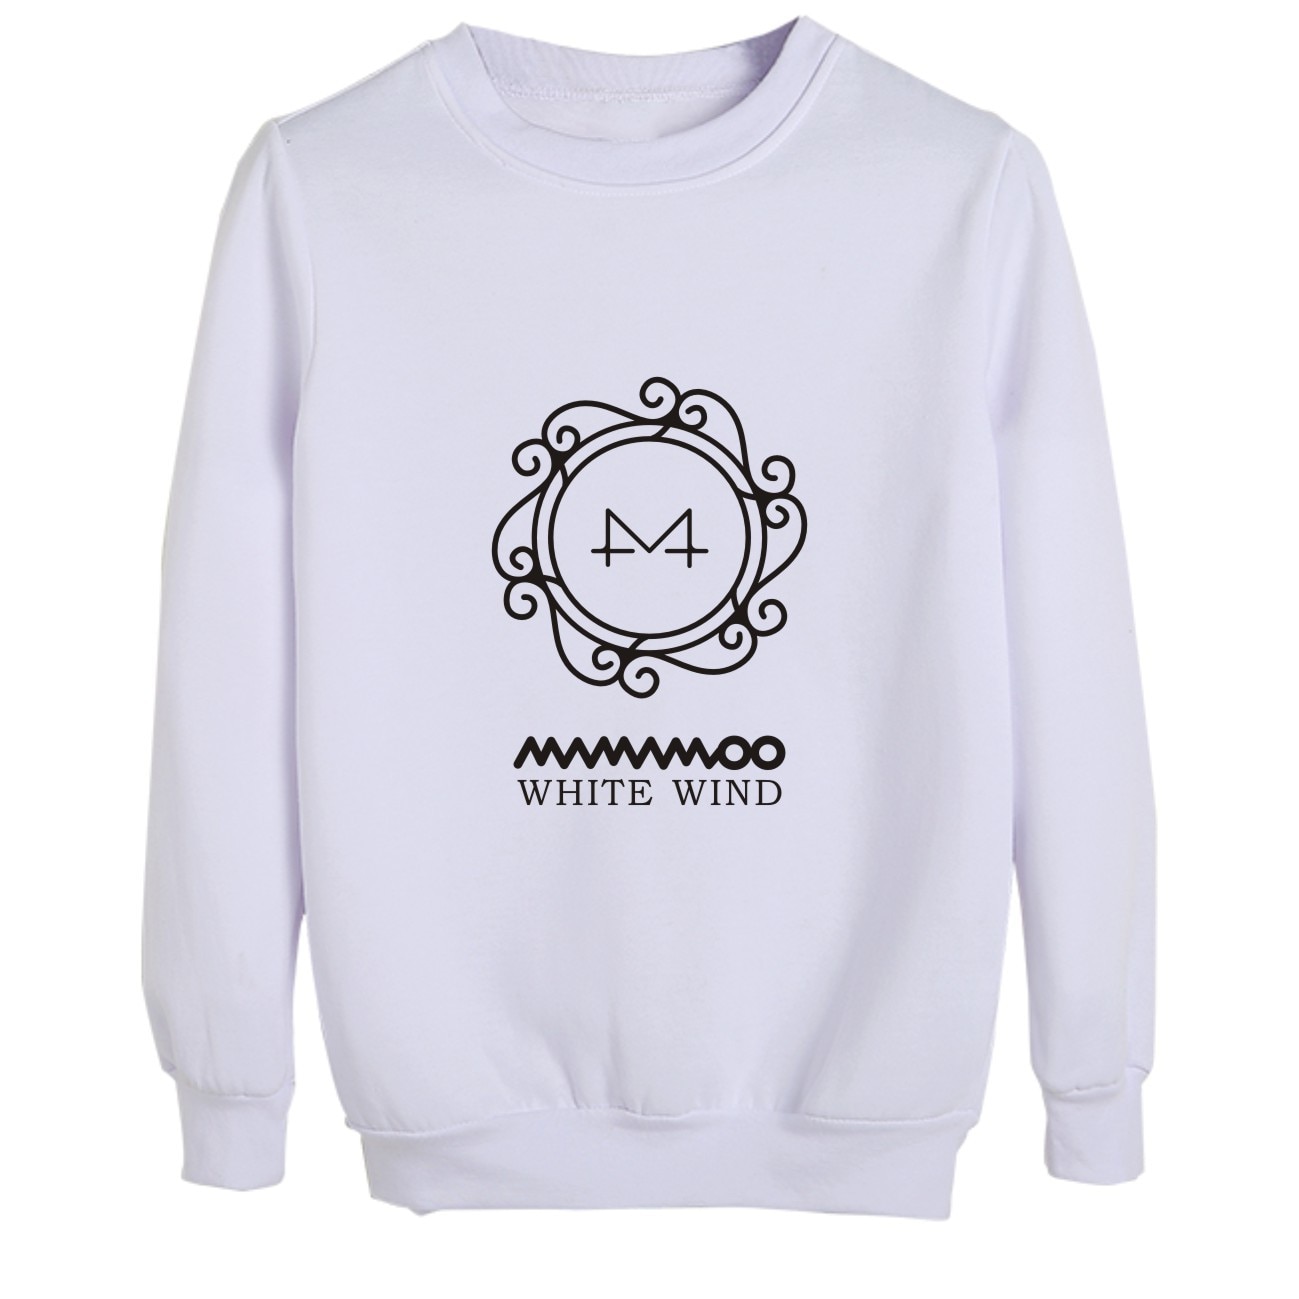 New arrival MAMAMOO pullover Sweatshirt New Album WHITE WIND Sweatshirt kpop Harajuku Hip hop Tops Coat 1 - Mamamoo Store